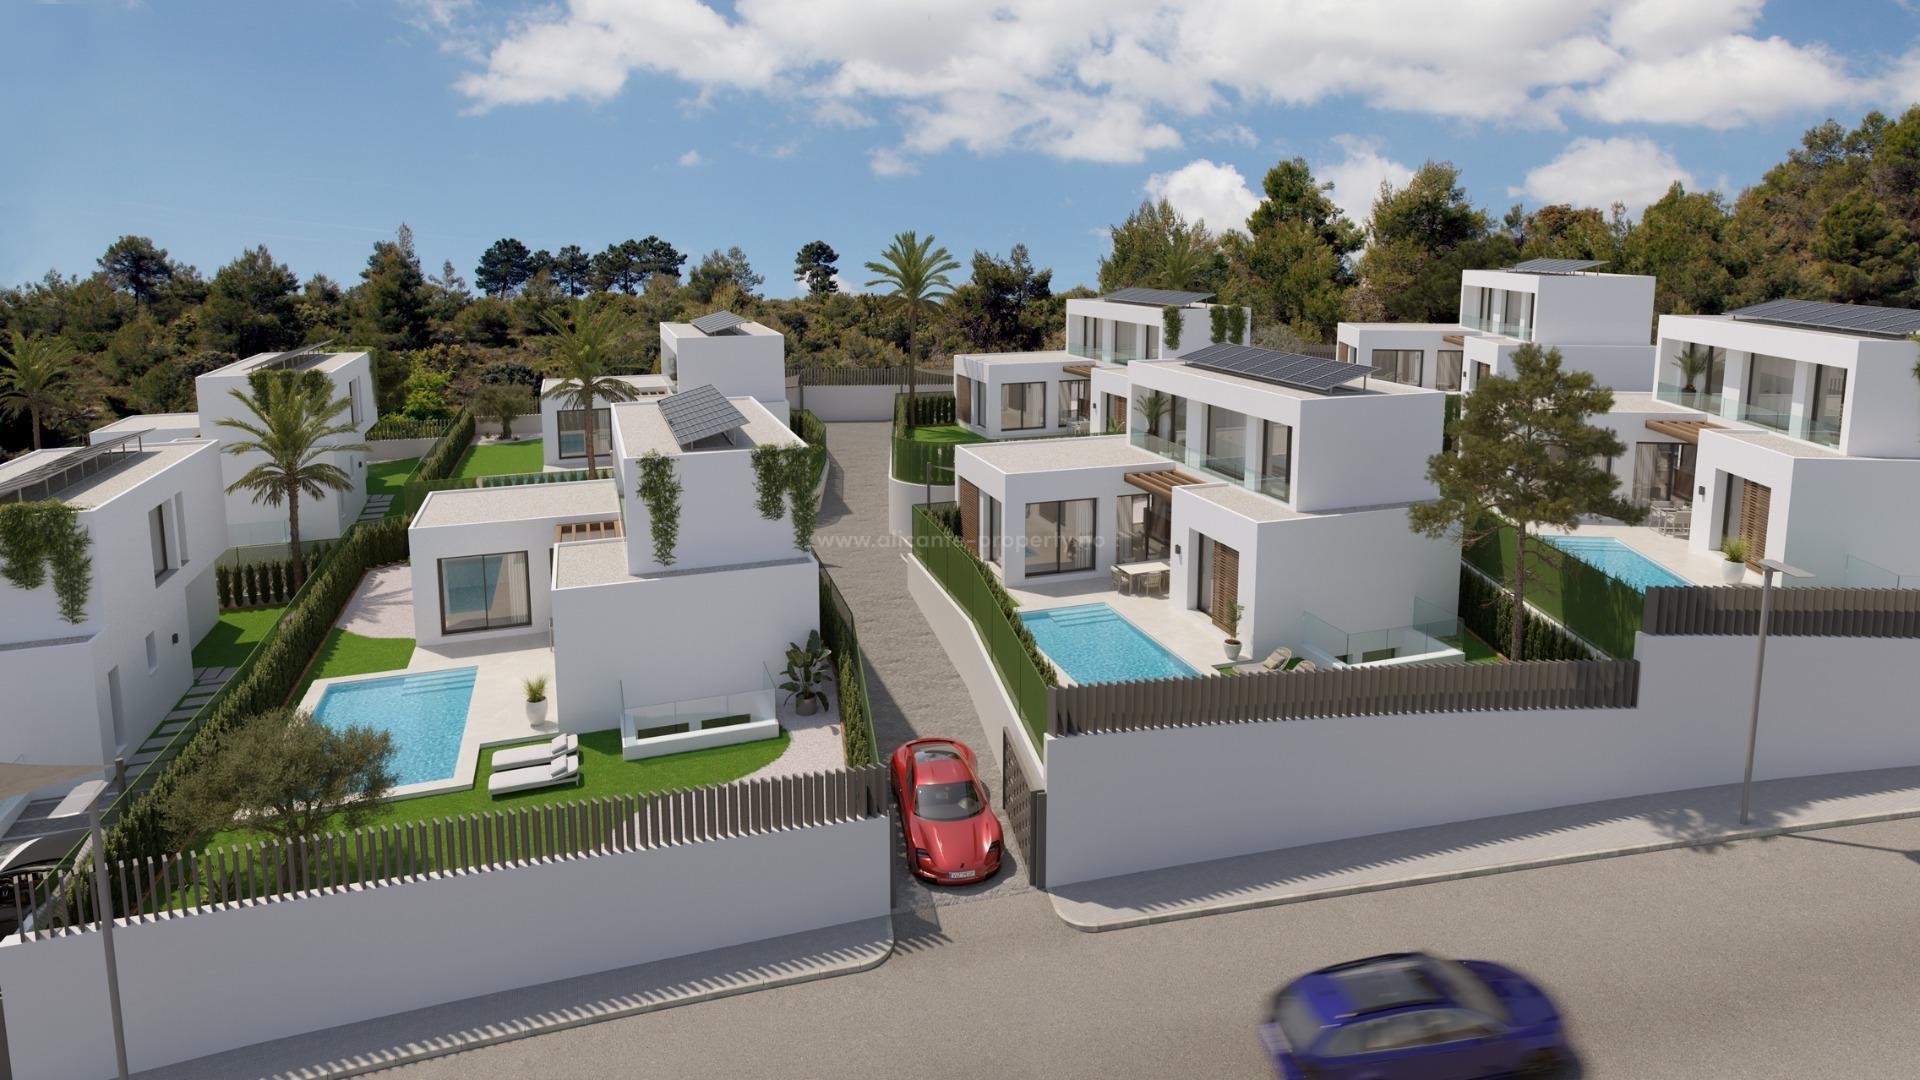 12 nybyggede villar/hus i Alfaz del Pi, 3 soverom, 2 bad, hage med svømmebasseng, fantastisk utsikt over Middelhavet